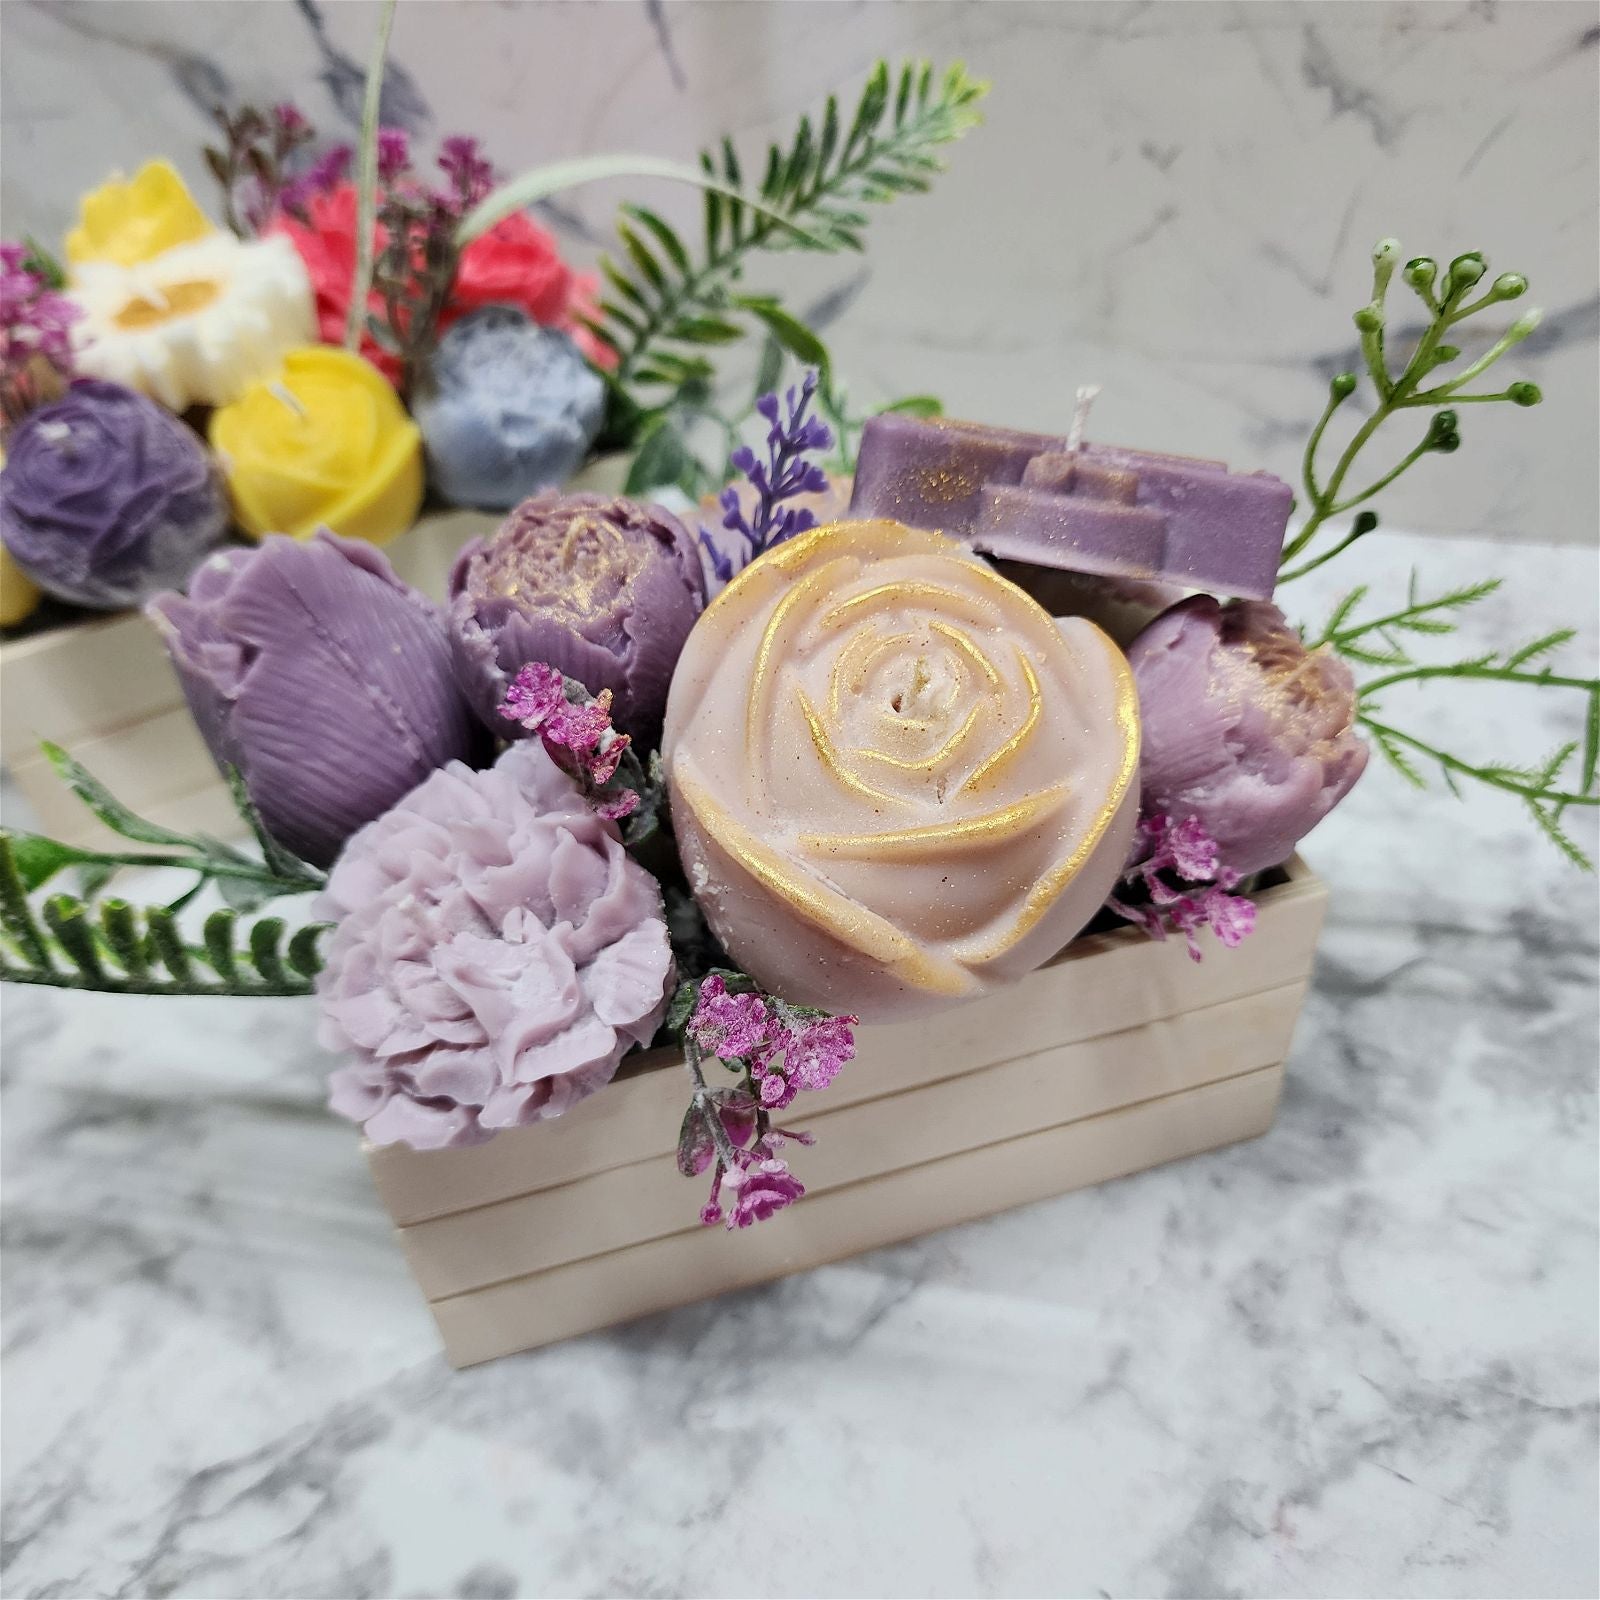 Purple Flower Candles Arrangement | Premium Soy Wax | Handcrafted Floral Candle Centerpiece | Wedding | Home Decor - D SCENT 